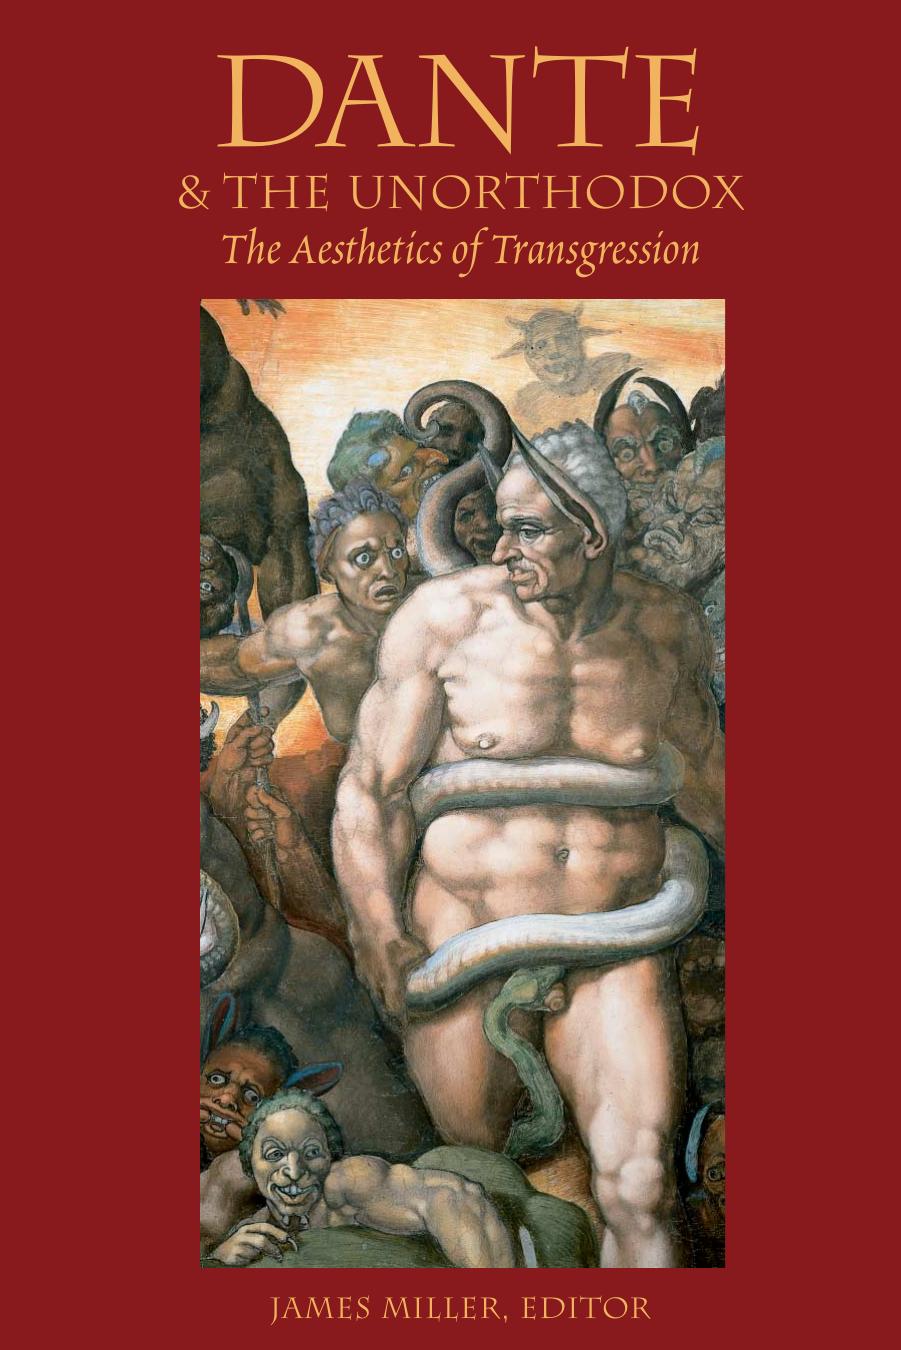 Dante & the Unorthodox: The Aesthetics of Transgression